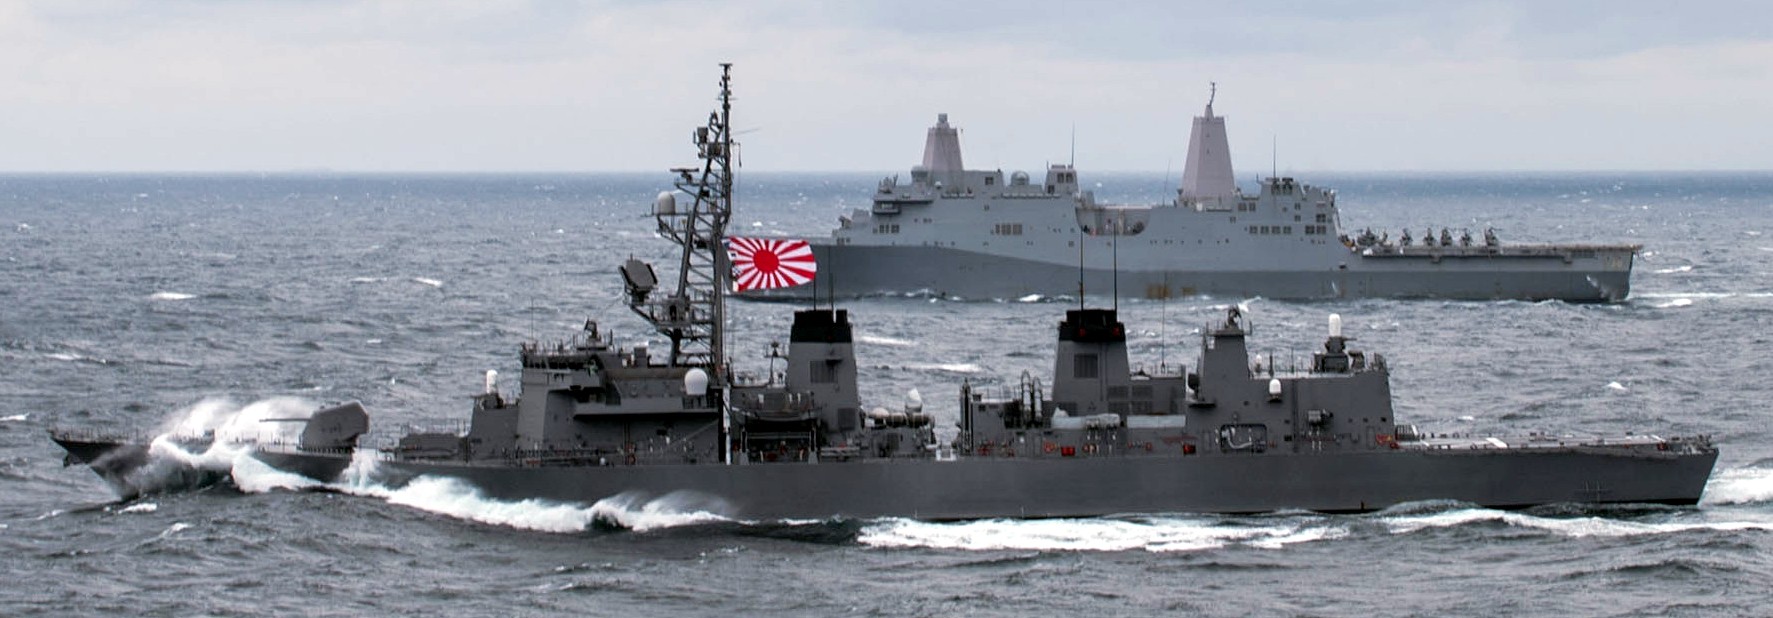 dd-113 js sazanami takanami class destroyer japan maritime self defense force jmsdf 21